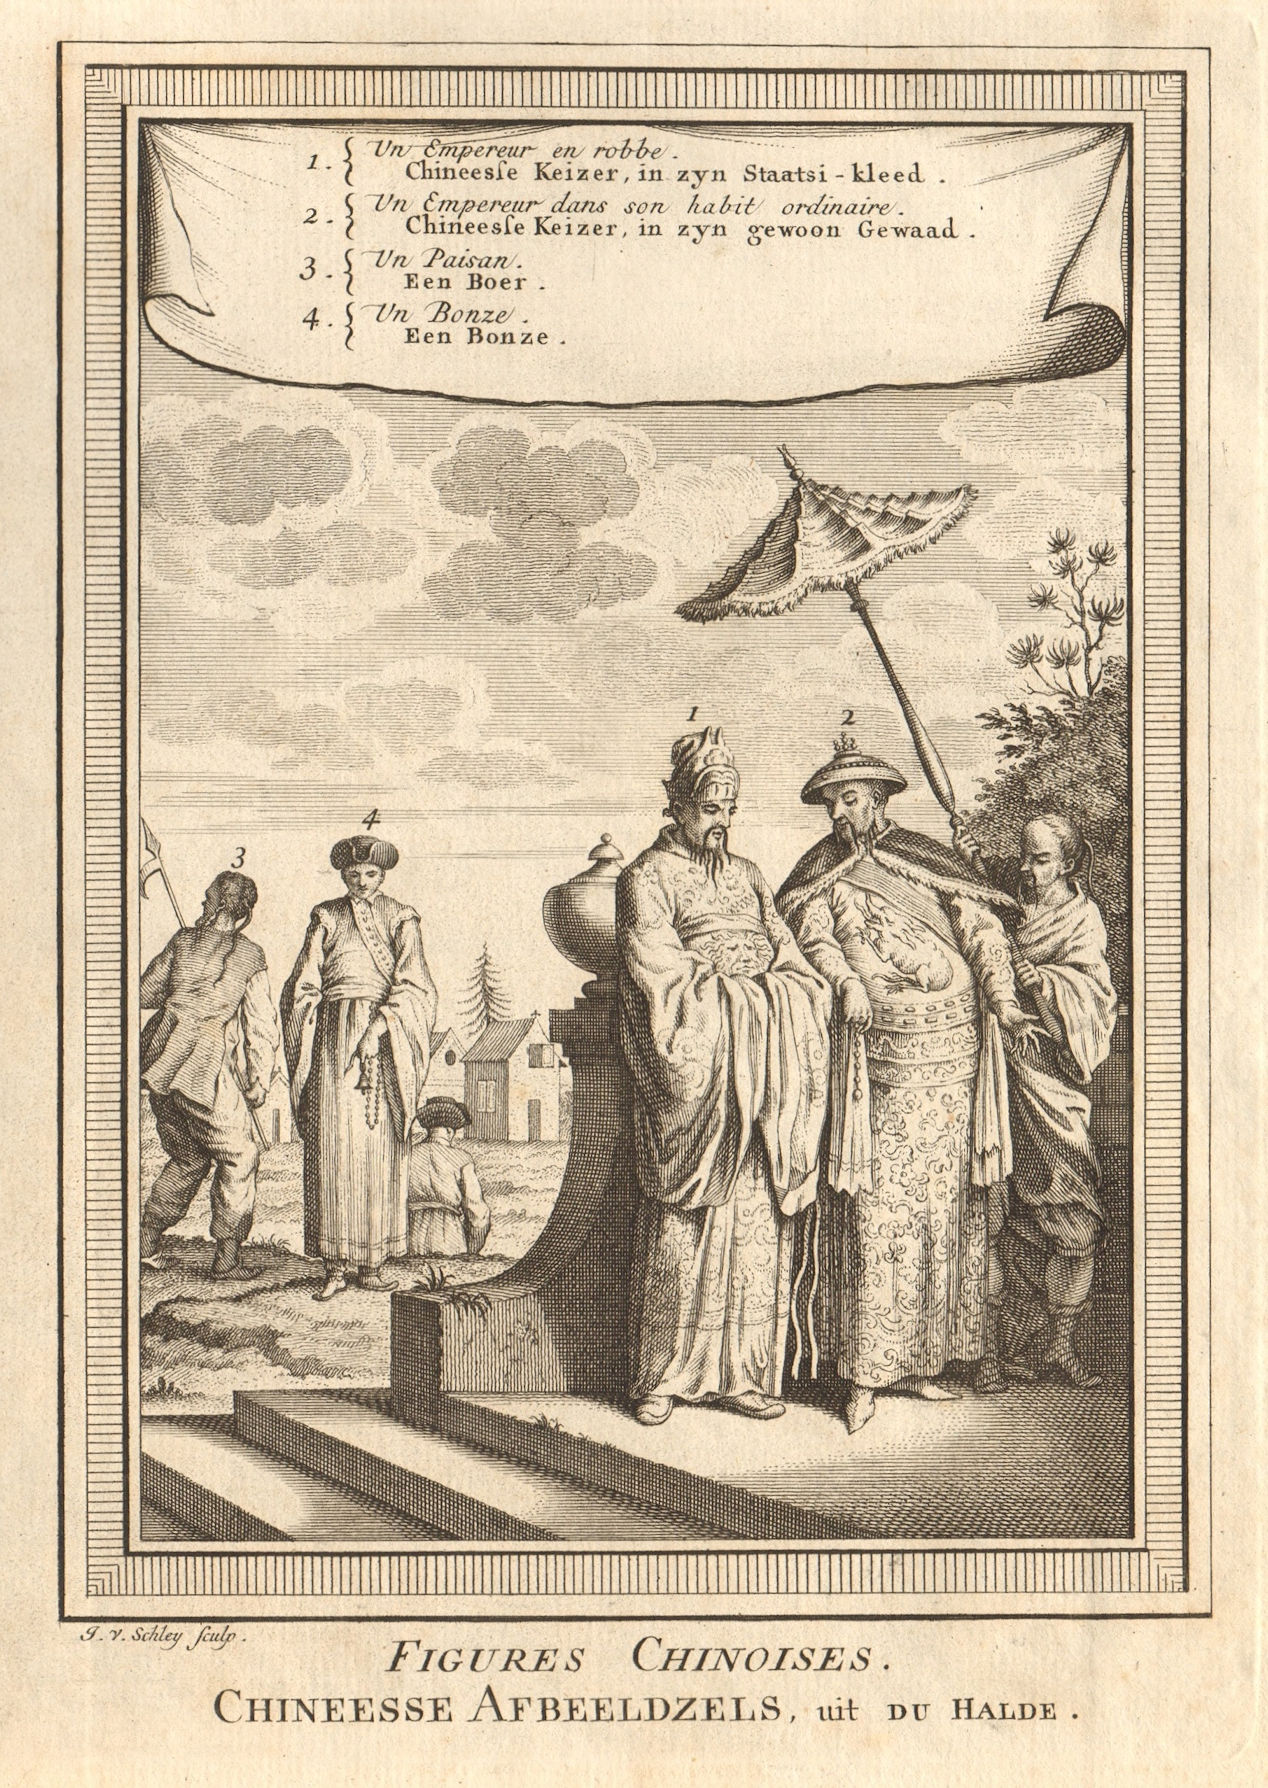 'Figures Chinoises'. Chinese Emperor. Buddhist monk / Bonze. China. SCHLEY 1749